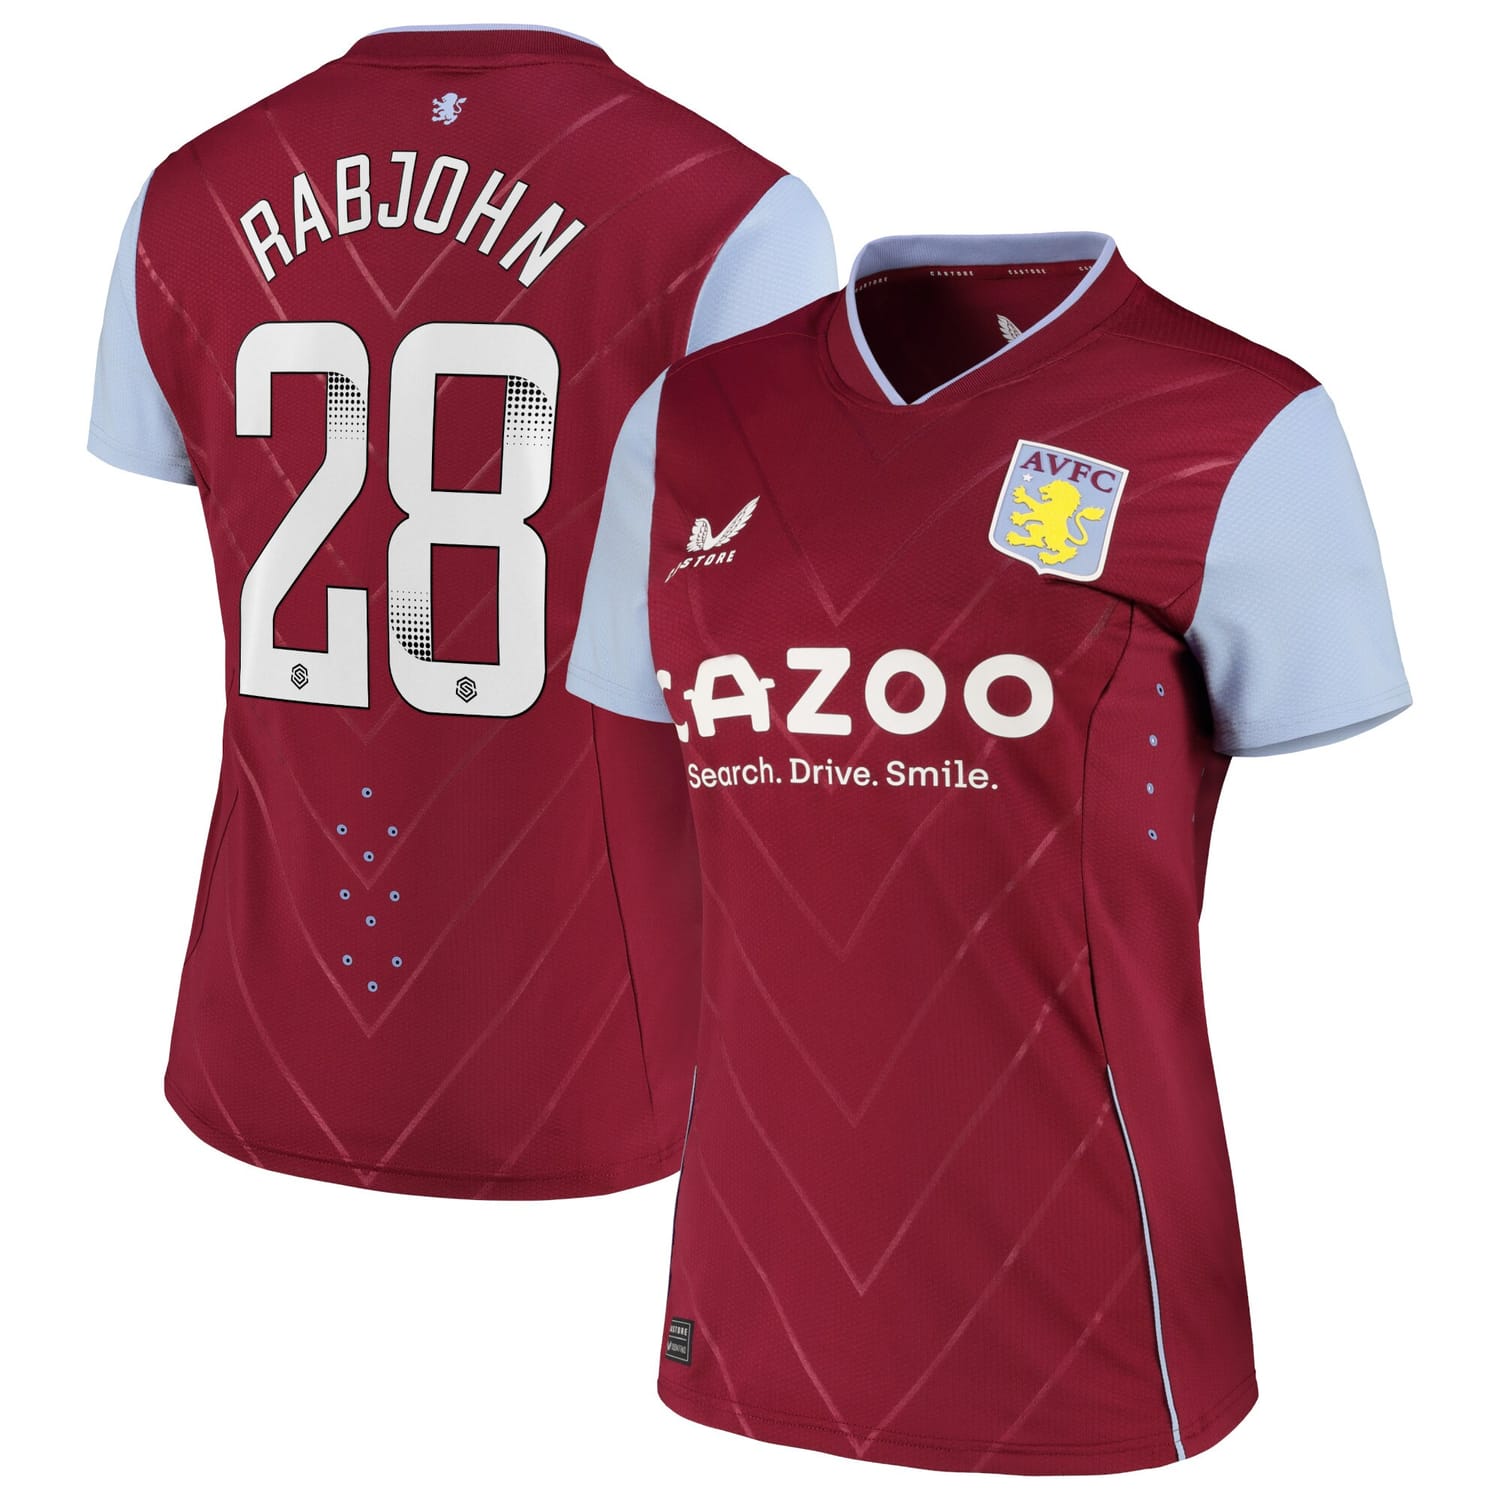 Premier League Aston Villa Home Pro Jersey Shirt 2022-23 player Evie Rabjohn 28 printing for Women